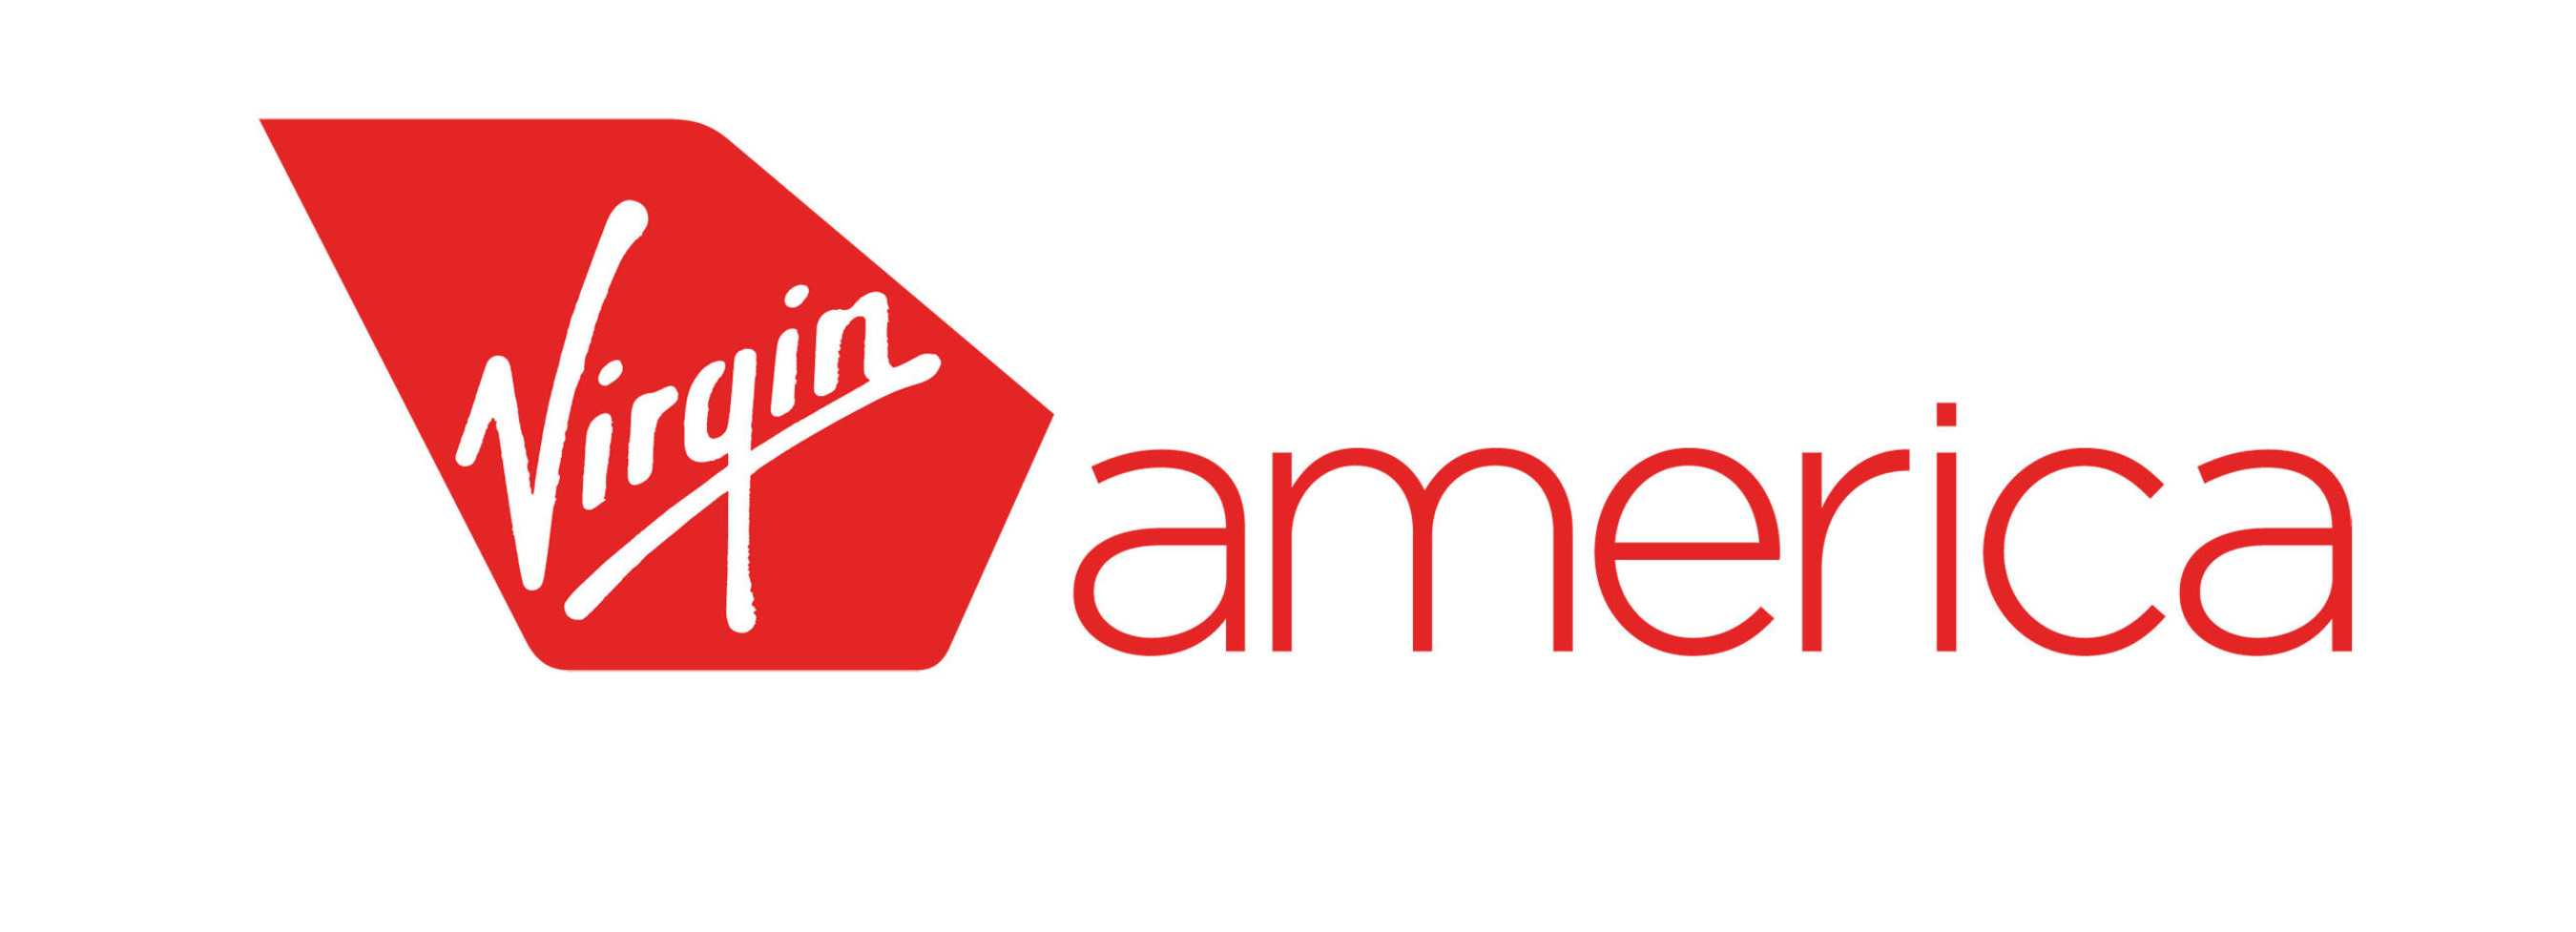 Image result for Virgin America airlines latest logo